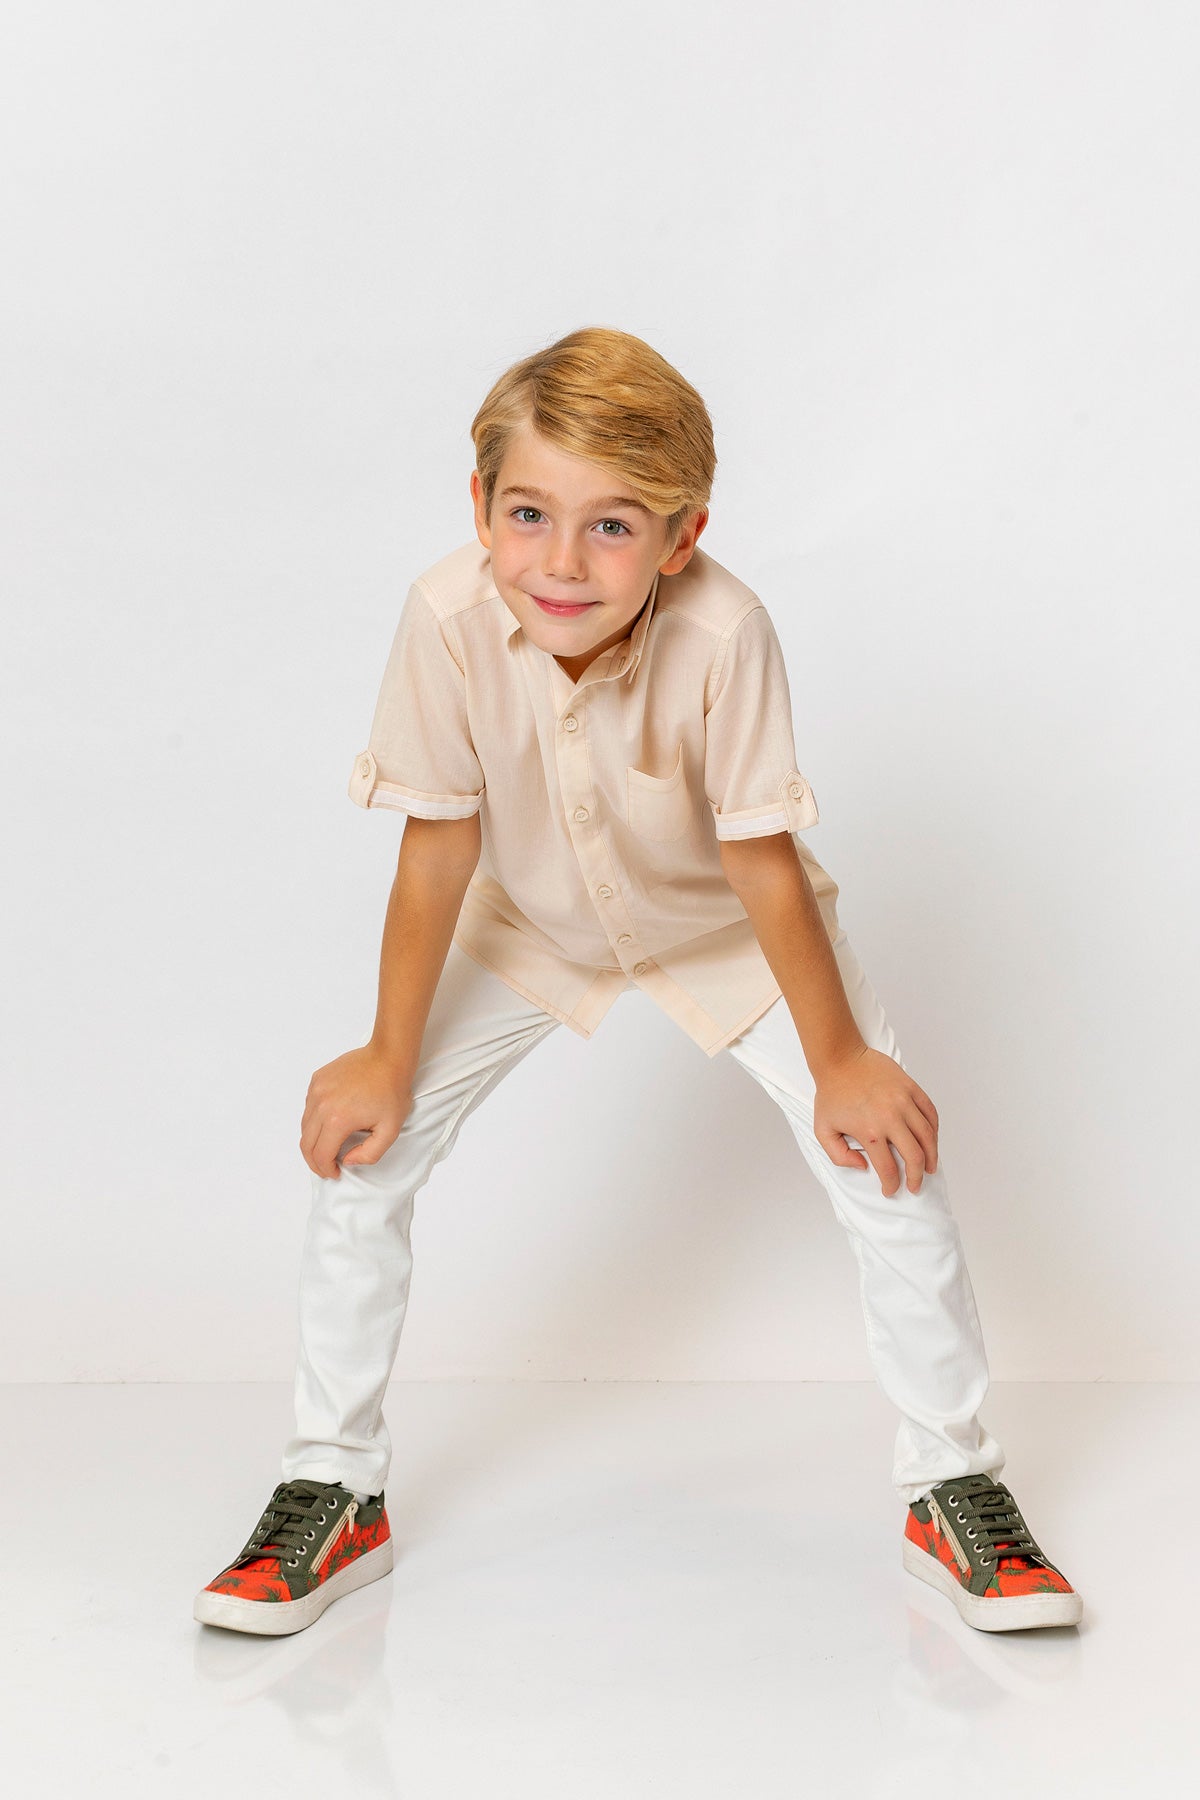 InCity Kids Boys Collared Short Sleeve Solid Pocket Button-Down Shirt InCity Boys & Girls